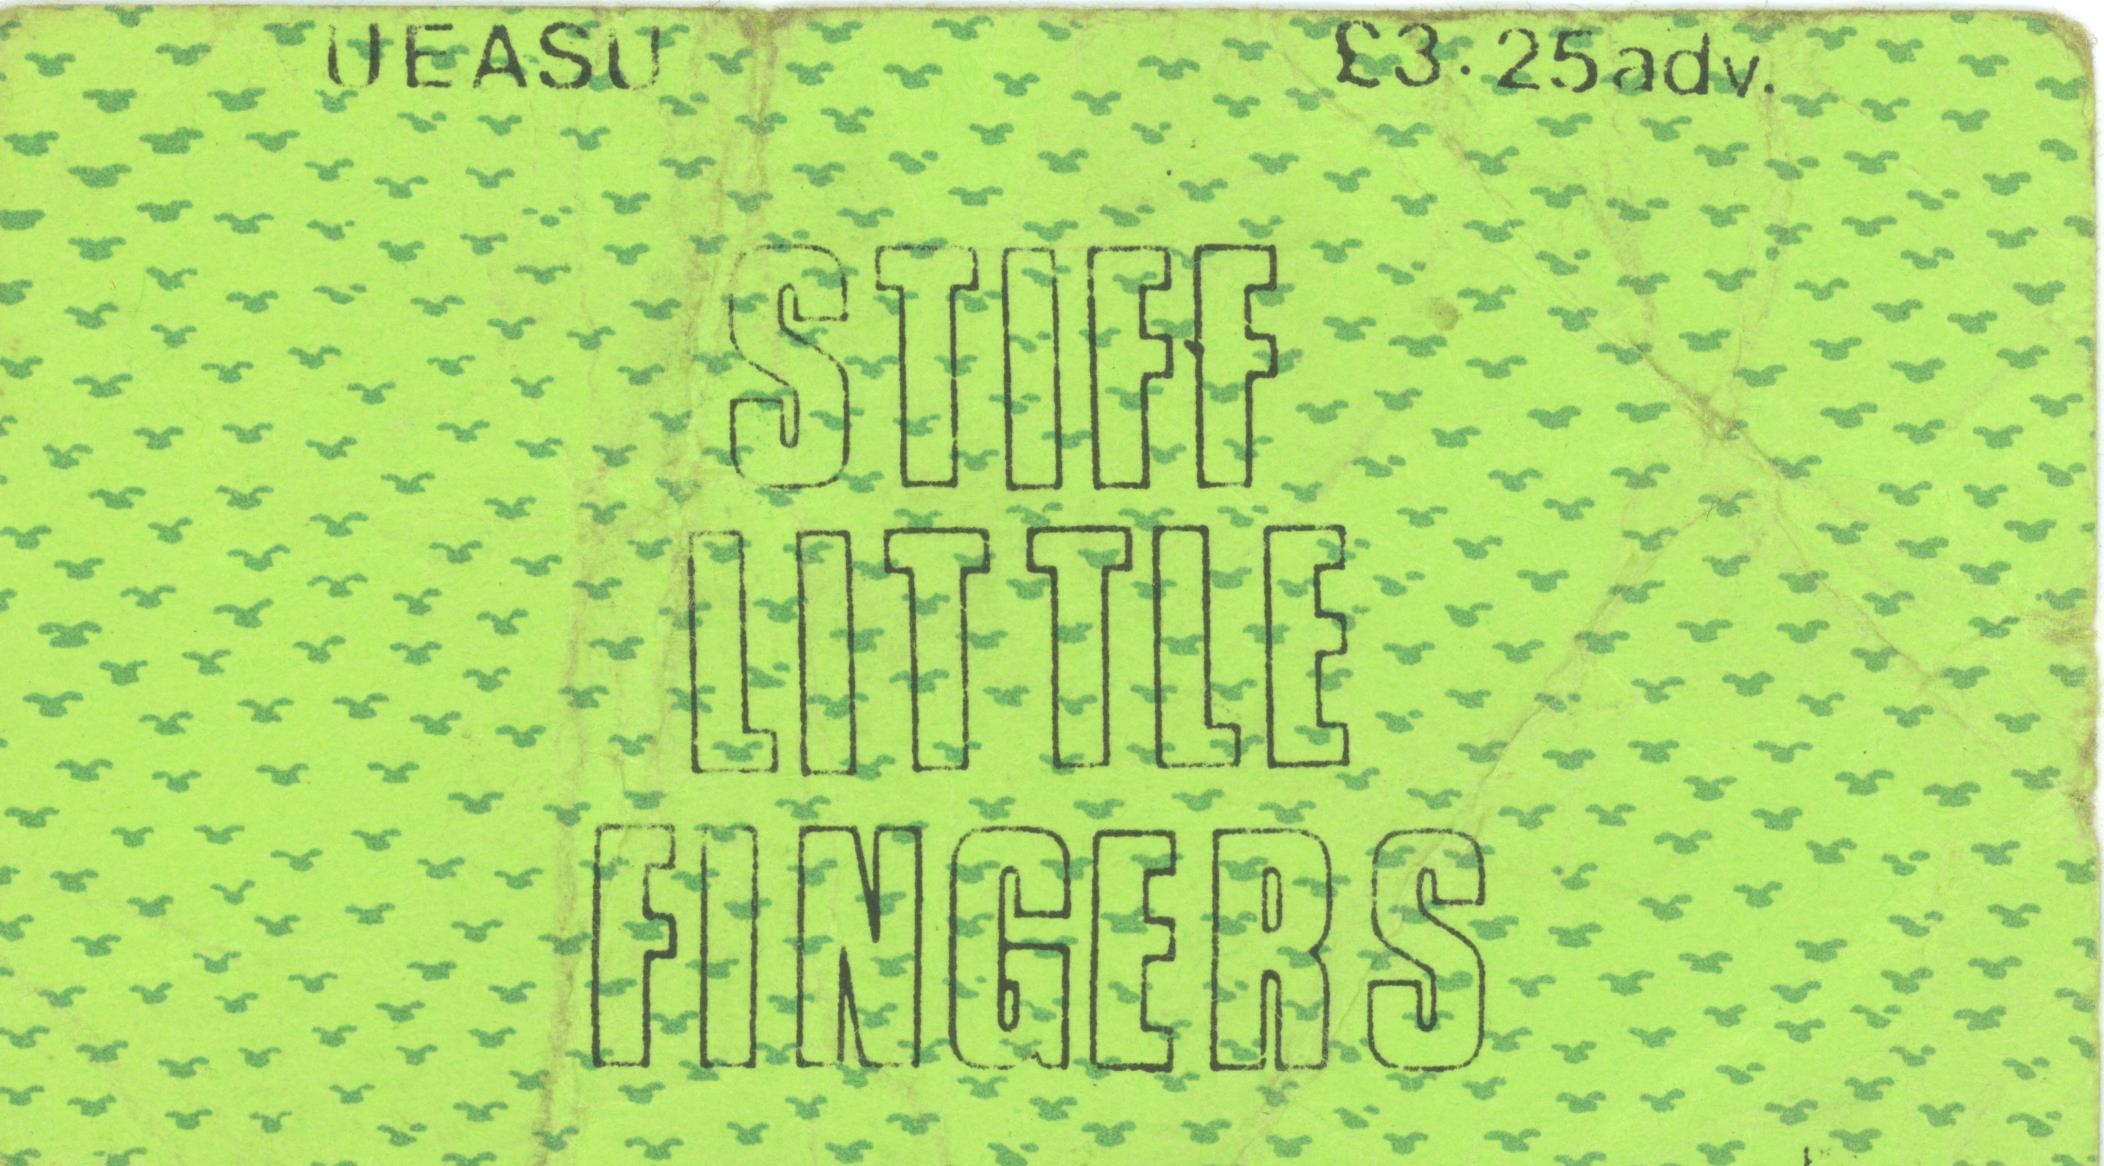 Stiff Little fingers